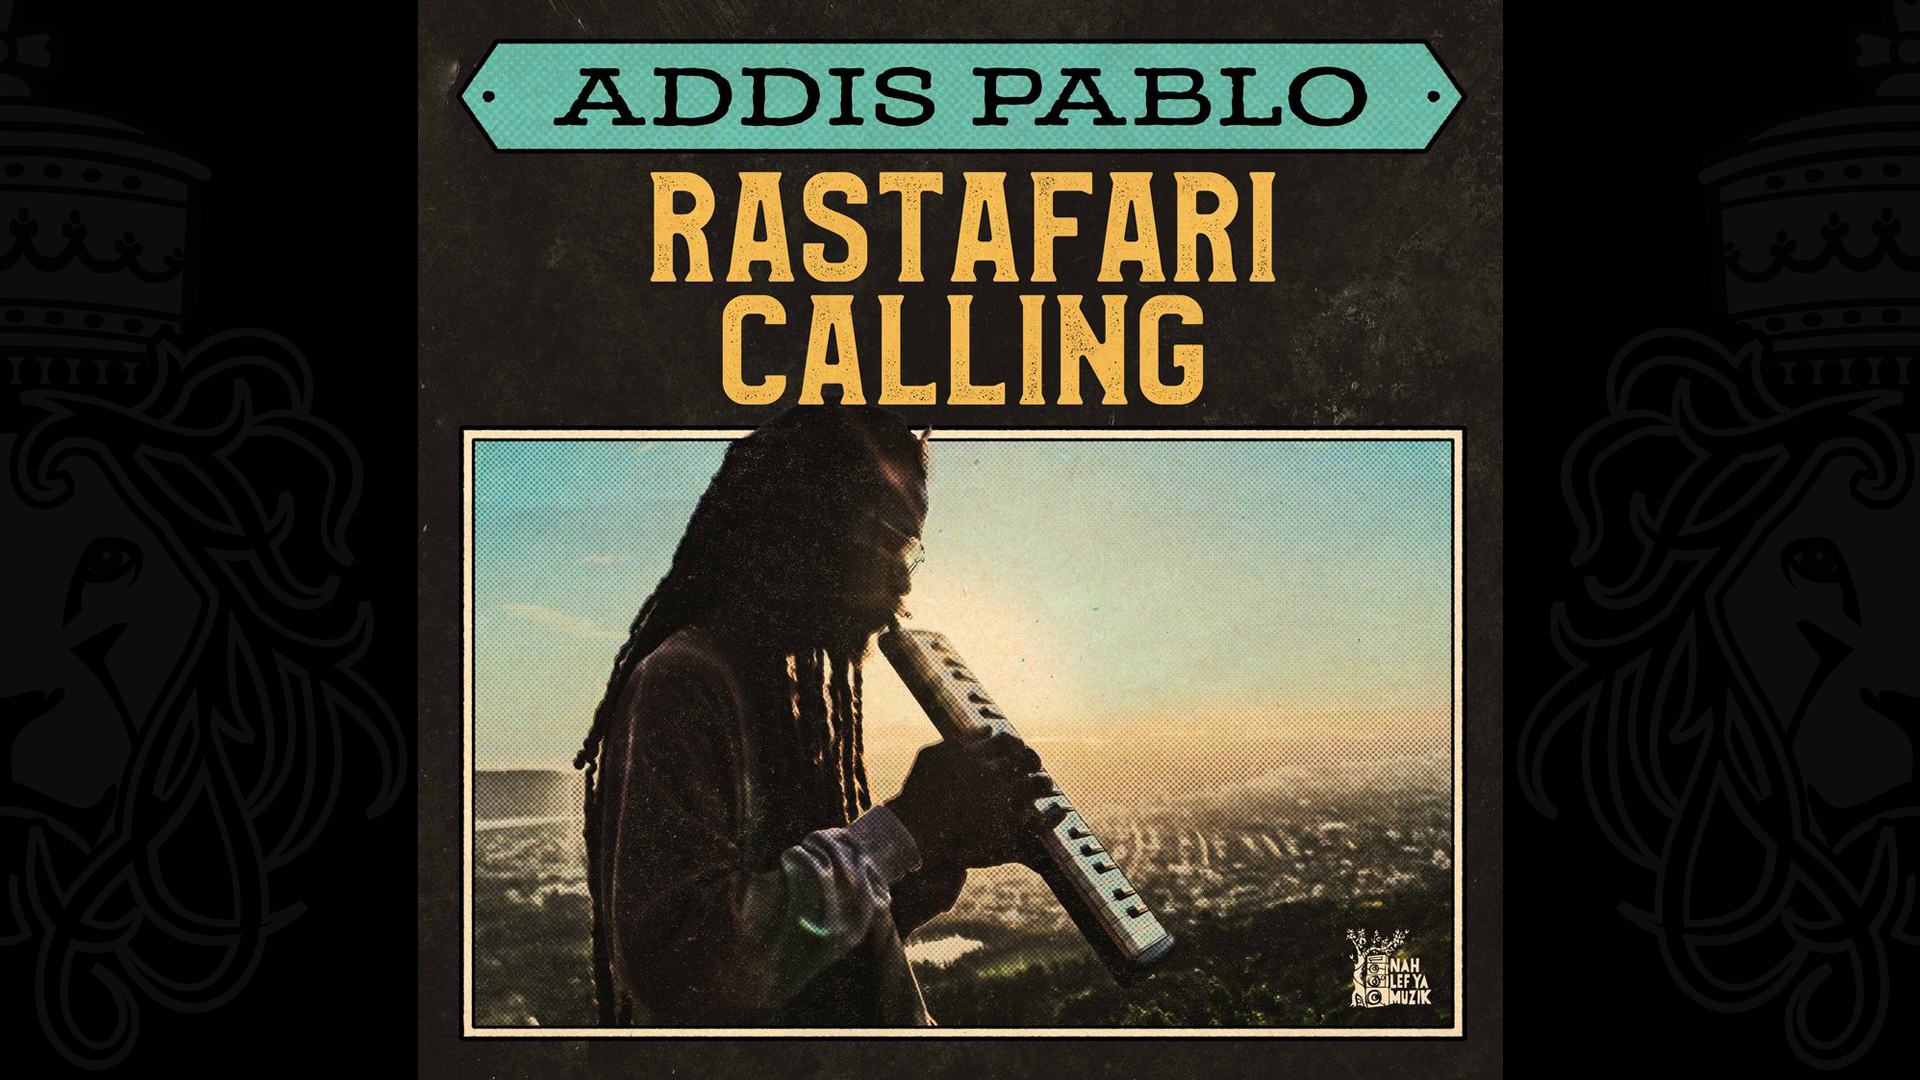 Rastafari Calling